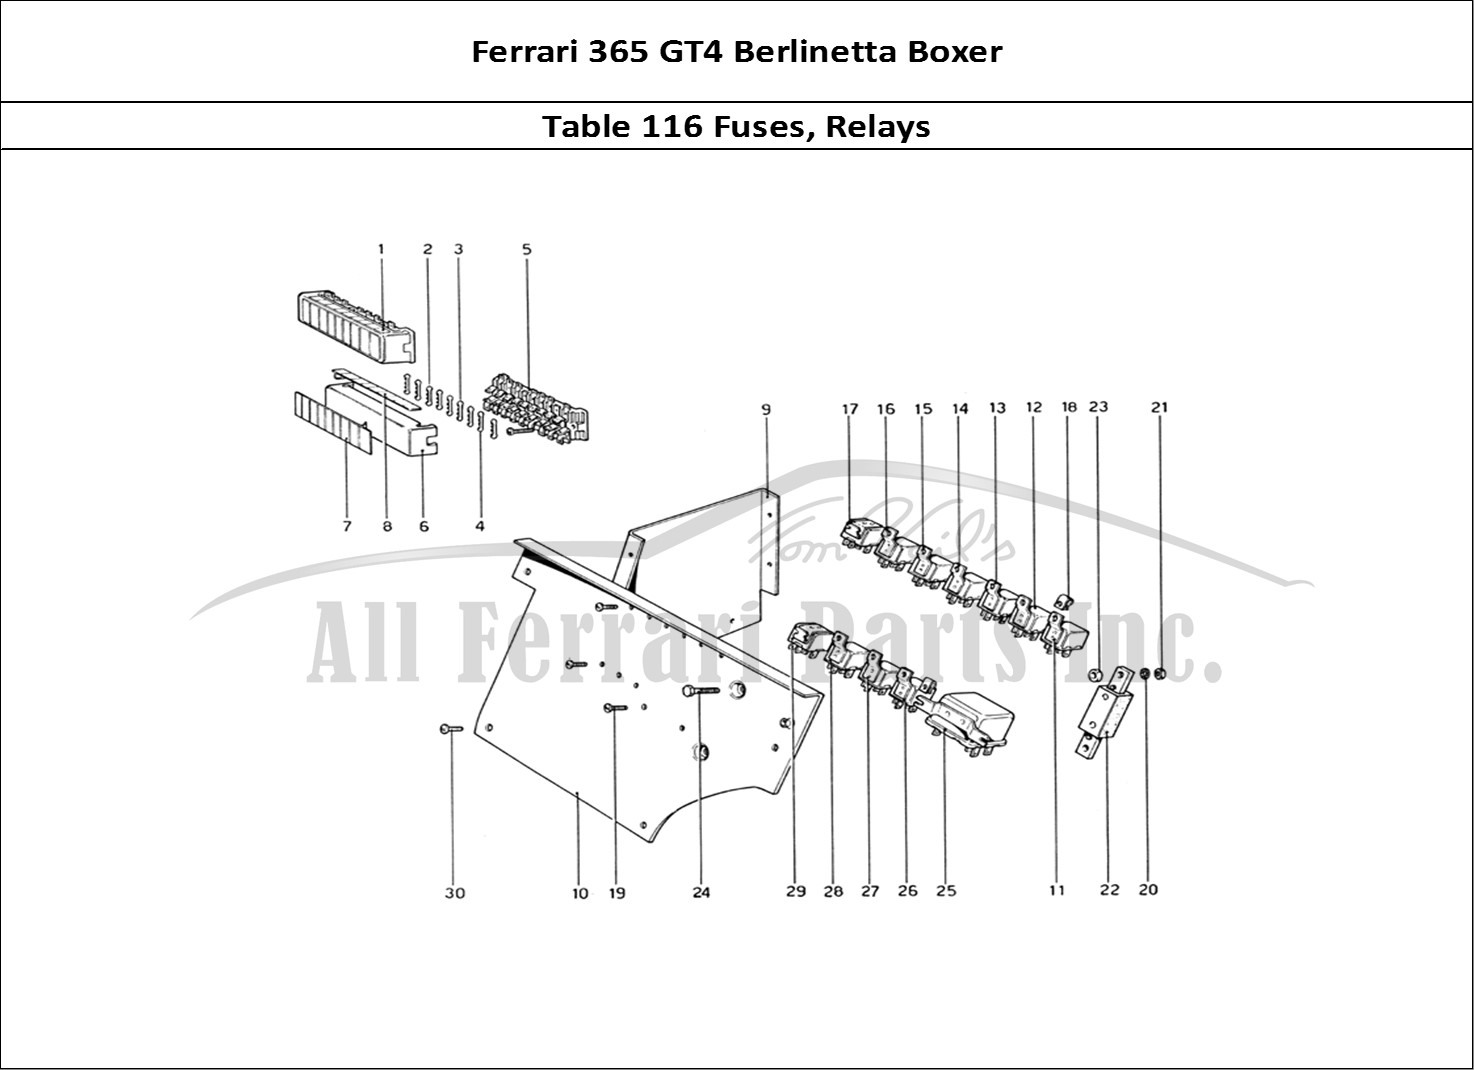 Ferrari Parts Ferrari 365 GT4 Berlinetta Boxer Page 116 Fuses and Relays